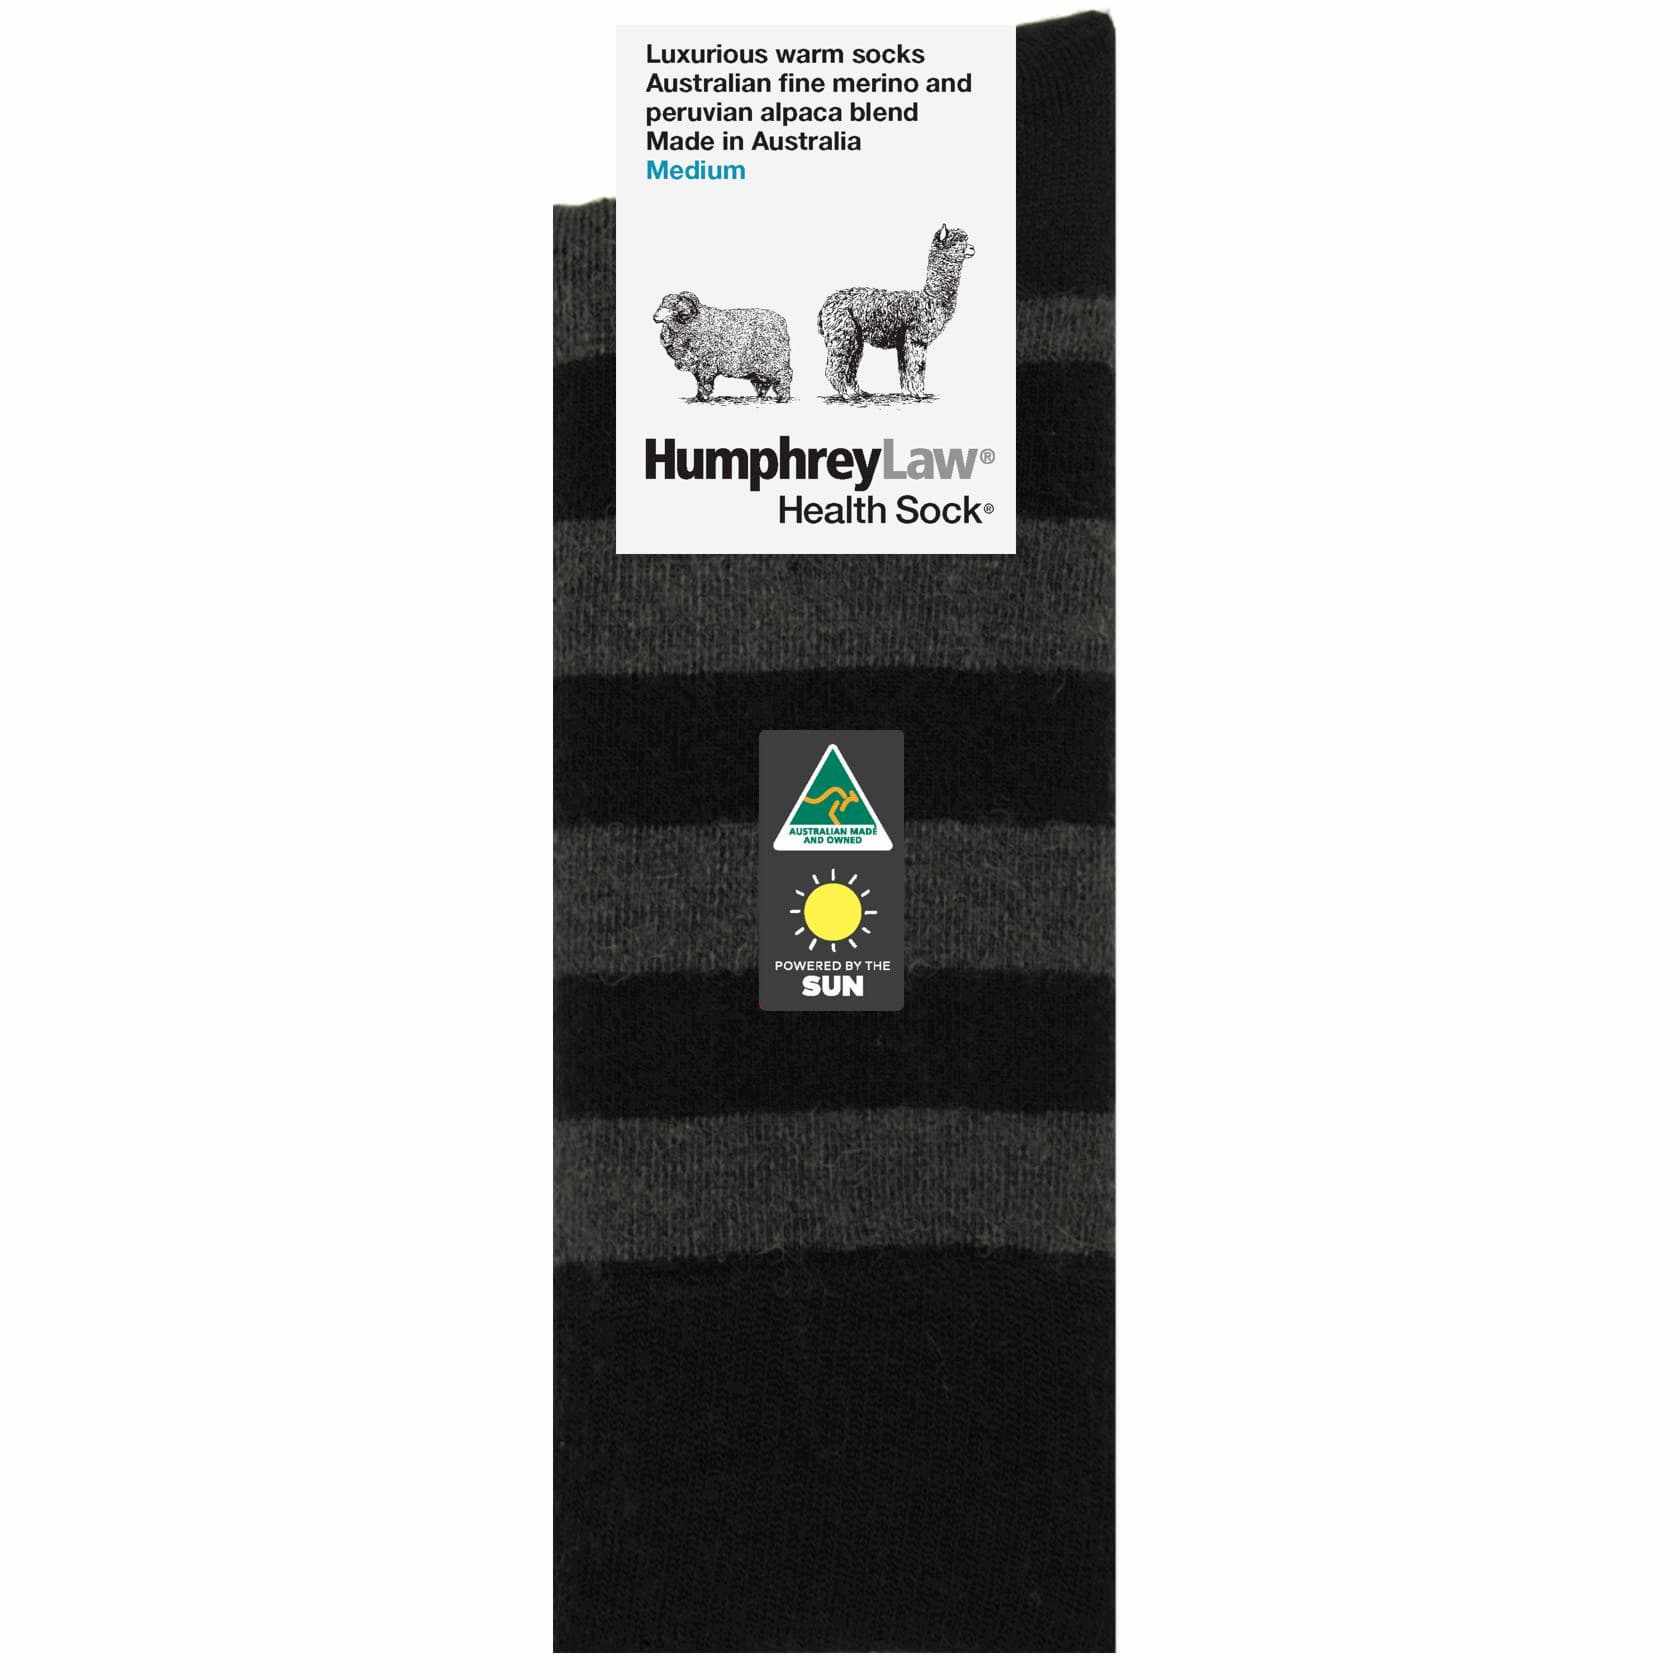 Merino and Alpaca Blend Striped Socks in Black - The Sockery